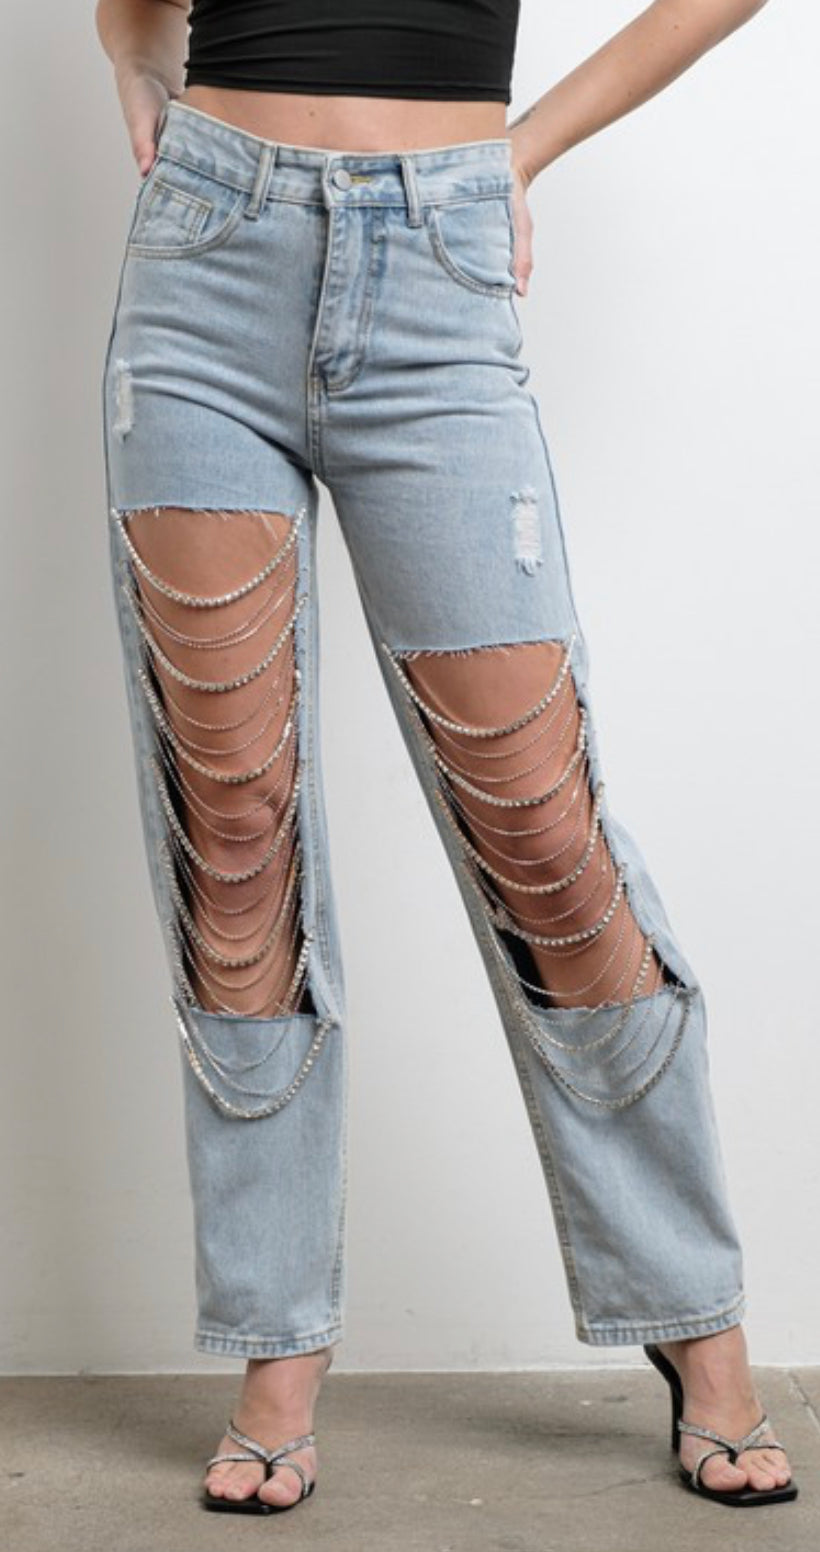 Rhinestone Jeans 